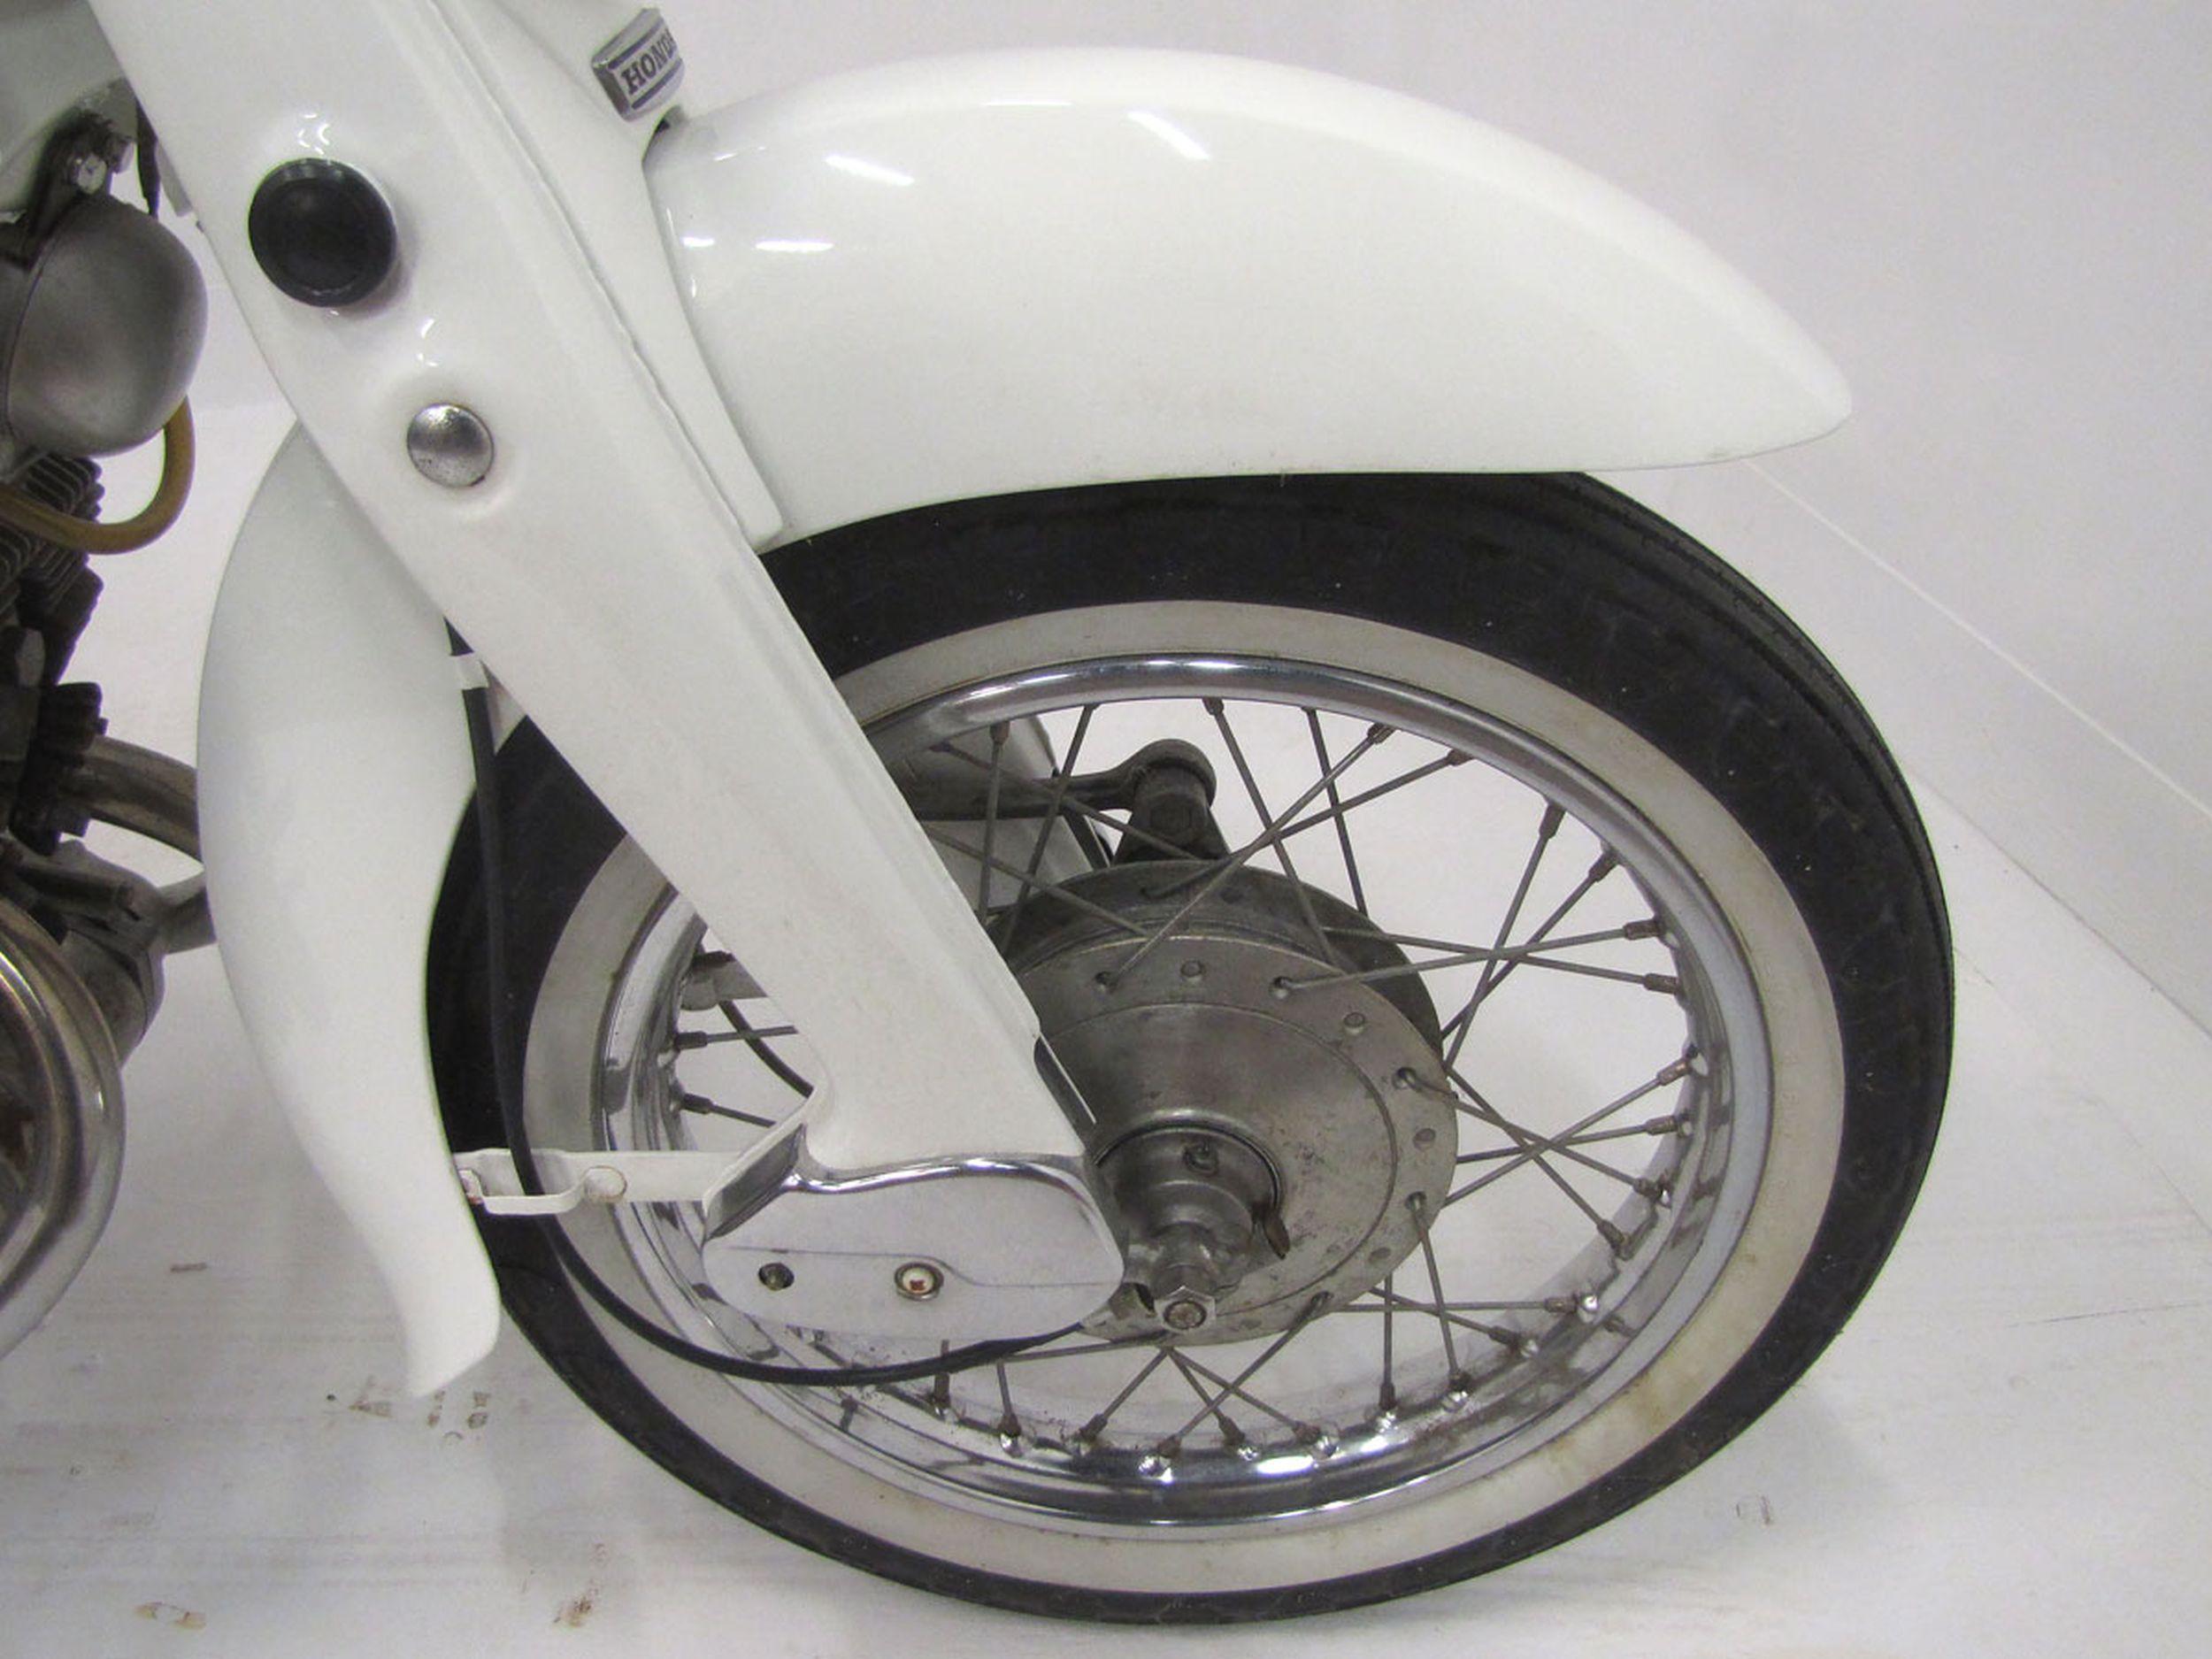 1965 Honda CA95 Dream Motorcycle